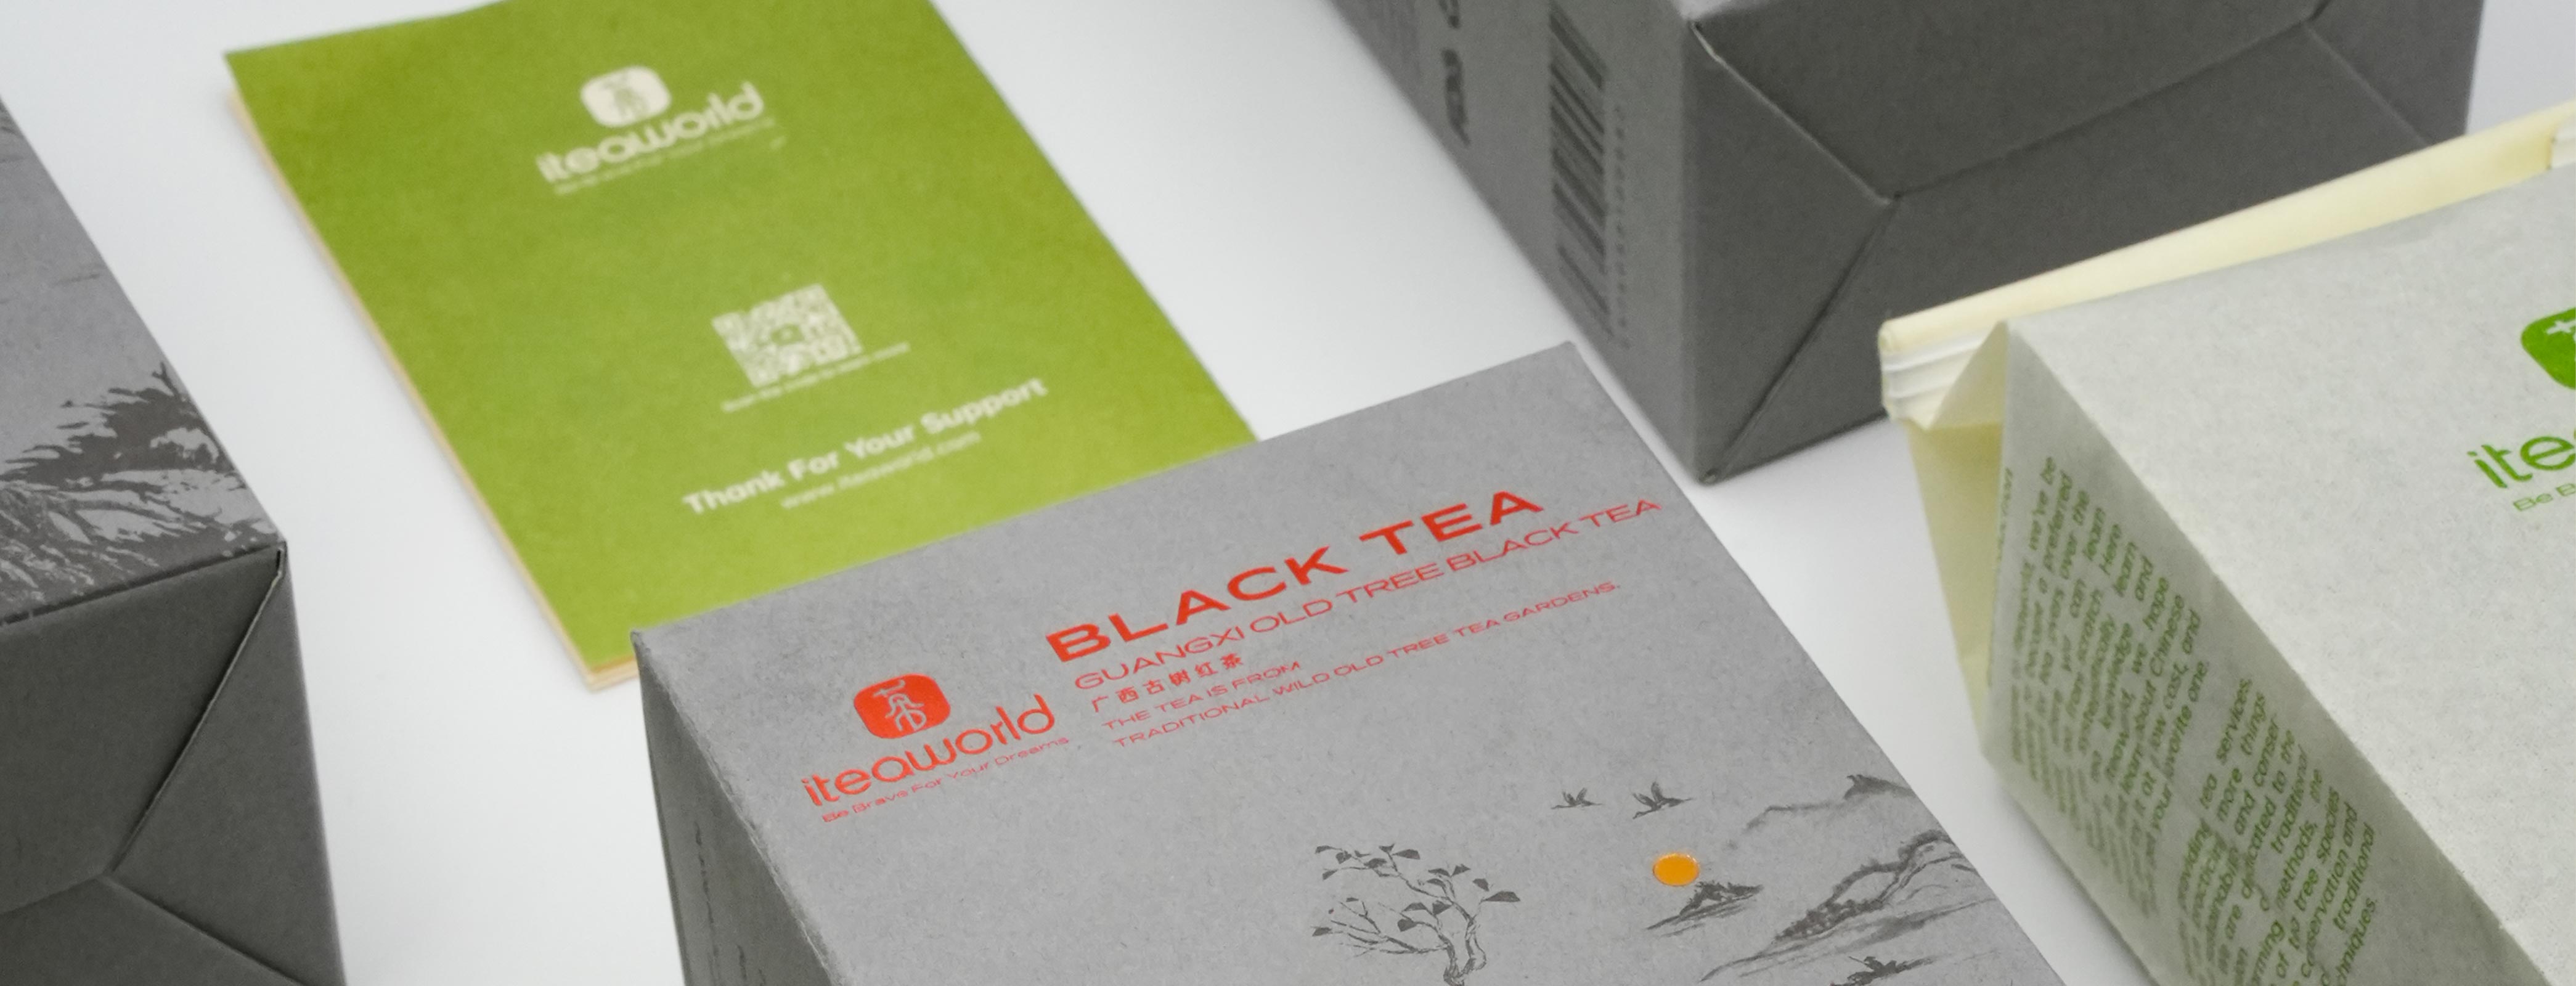 Using-Environmentally-friendly-Packaging-old-tree-tea